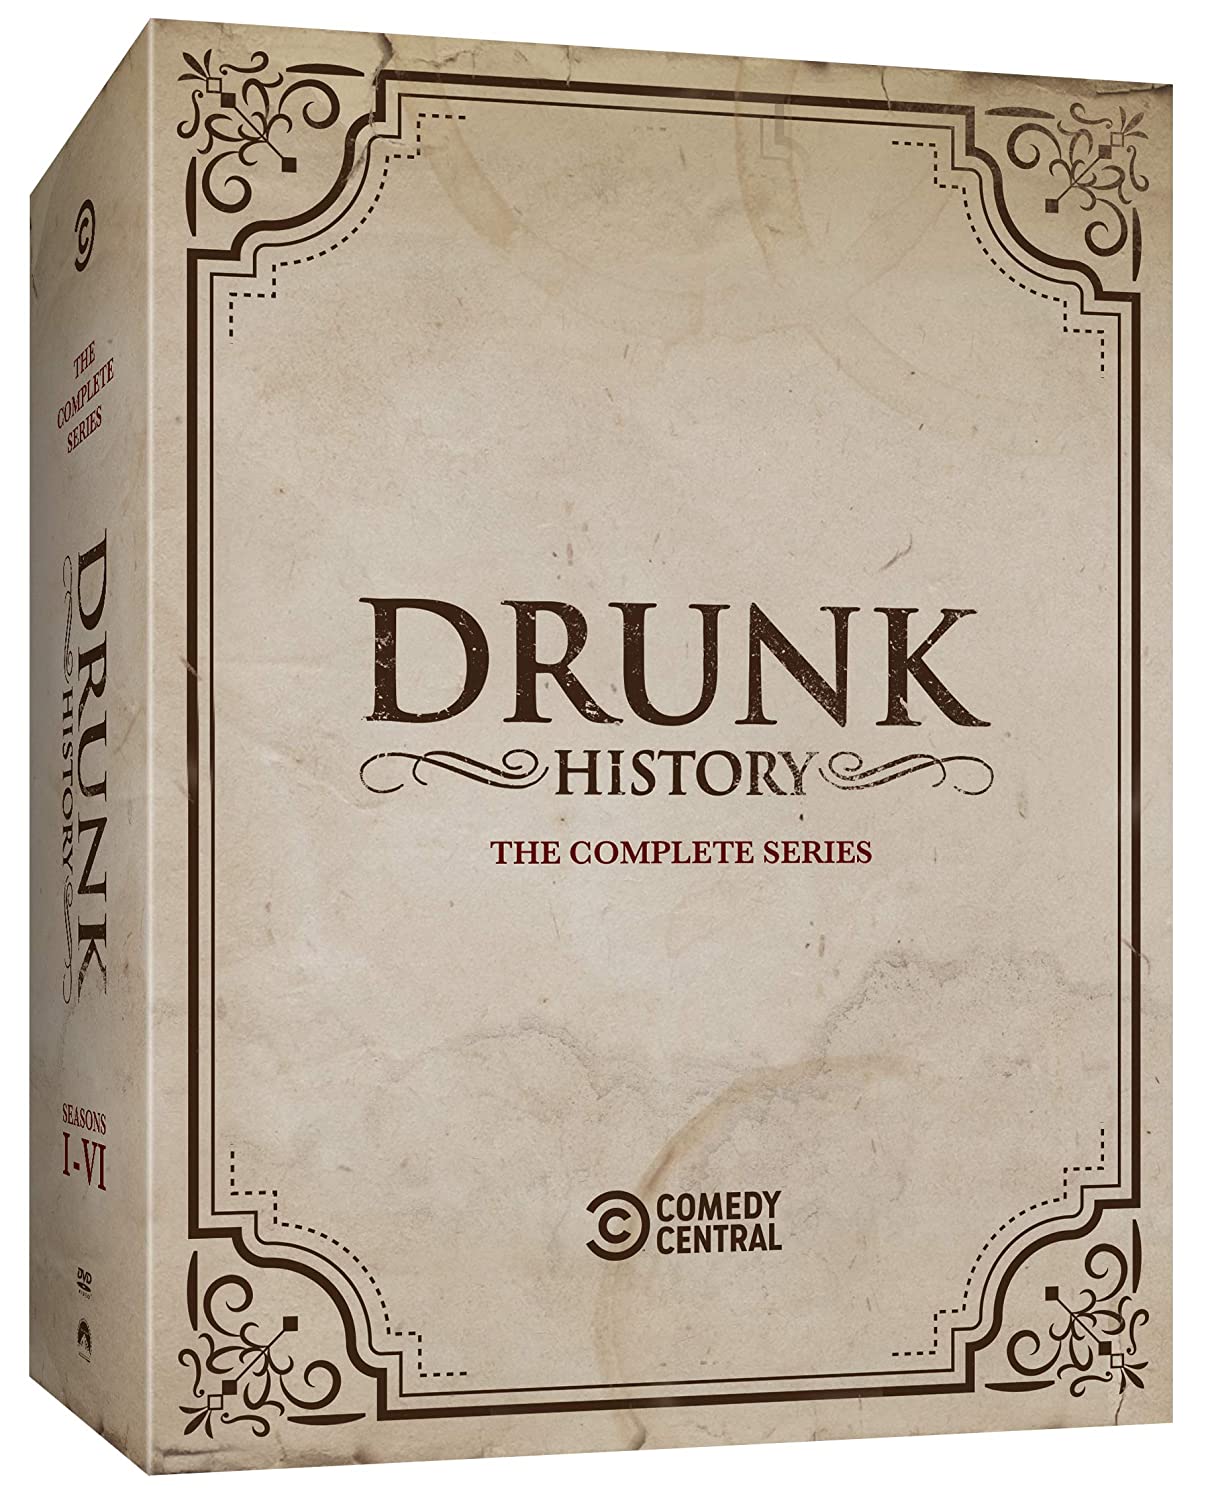 Drink stories. Drunk History.